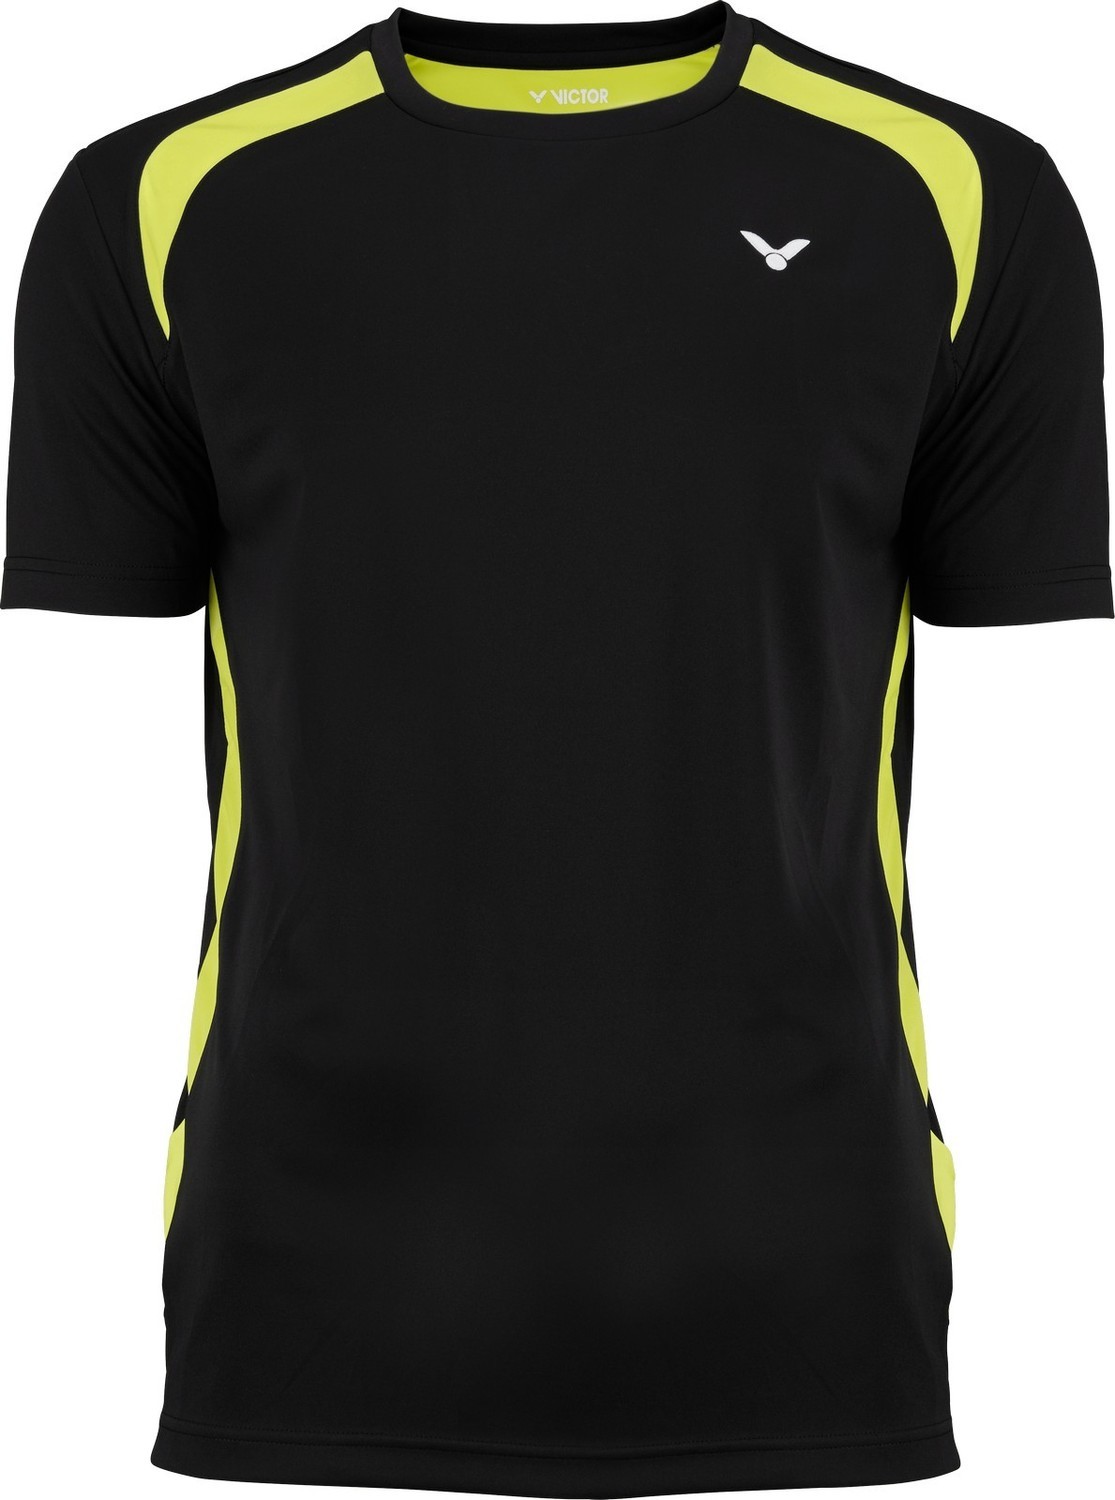 Victor Function T-Shirt Unisex 6949 - Black